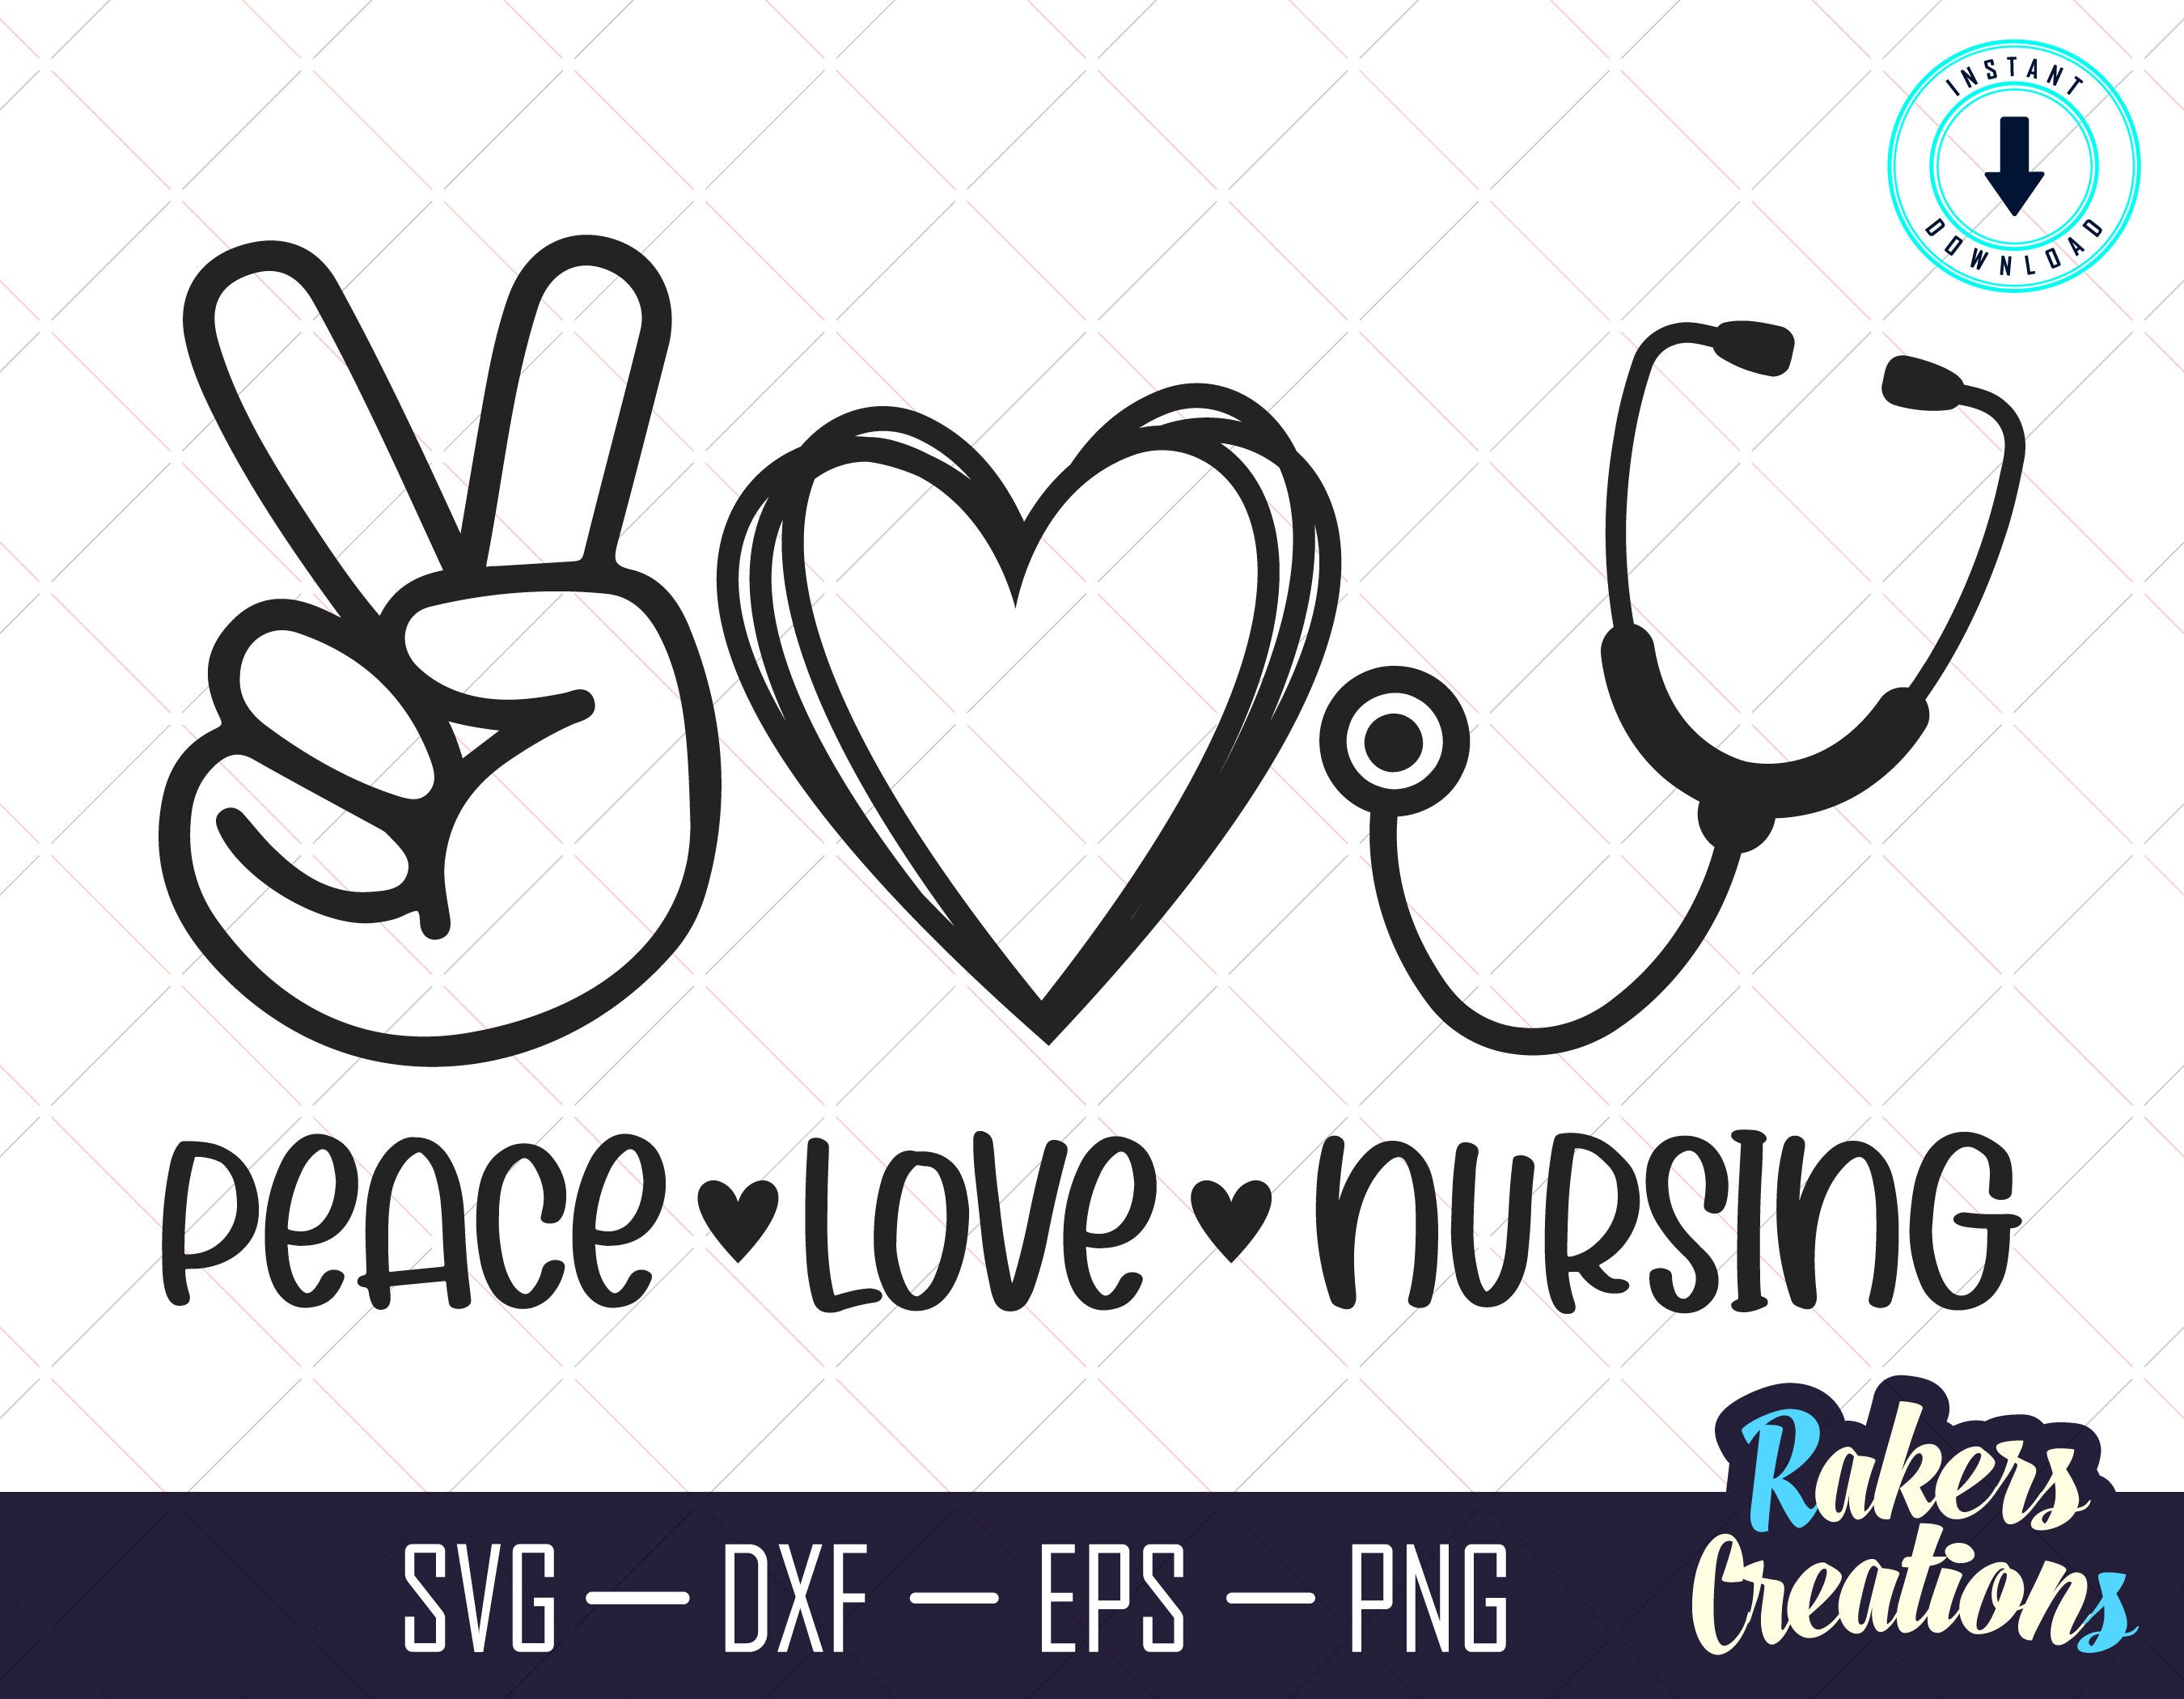 Nurse Gifts to Ship Peace Love Nursing Nurse Hat Sticker by McCaff Designs